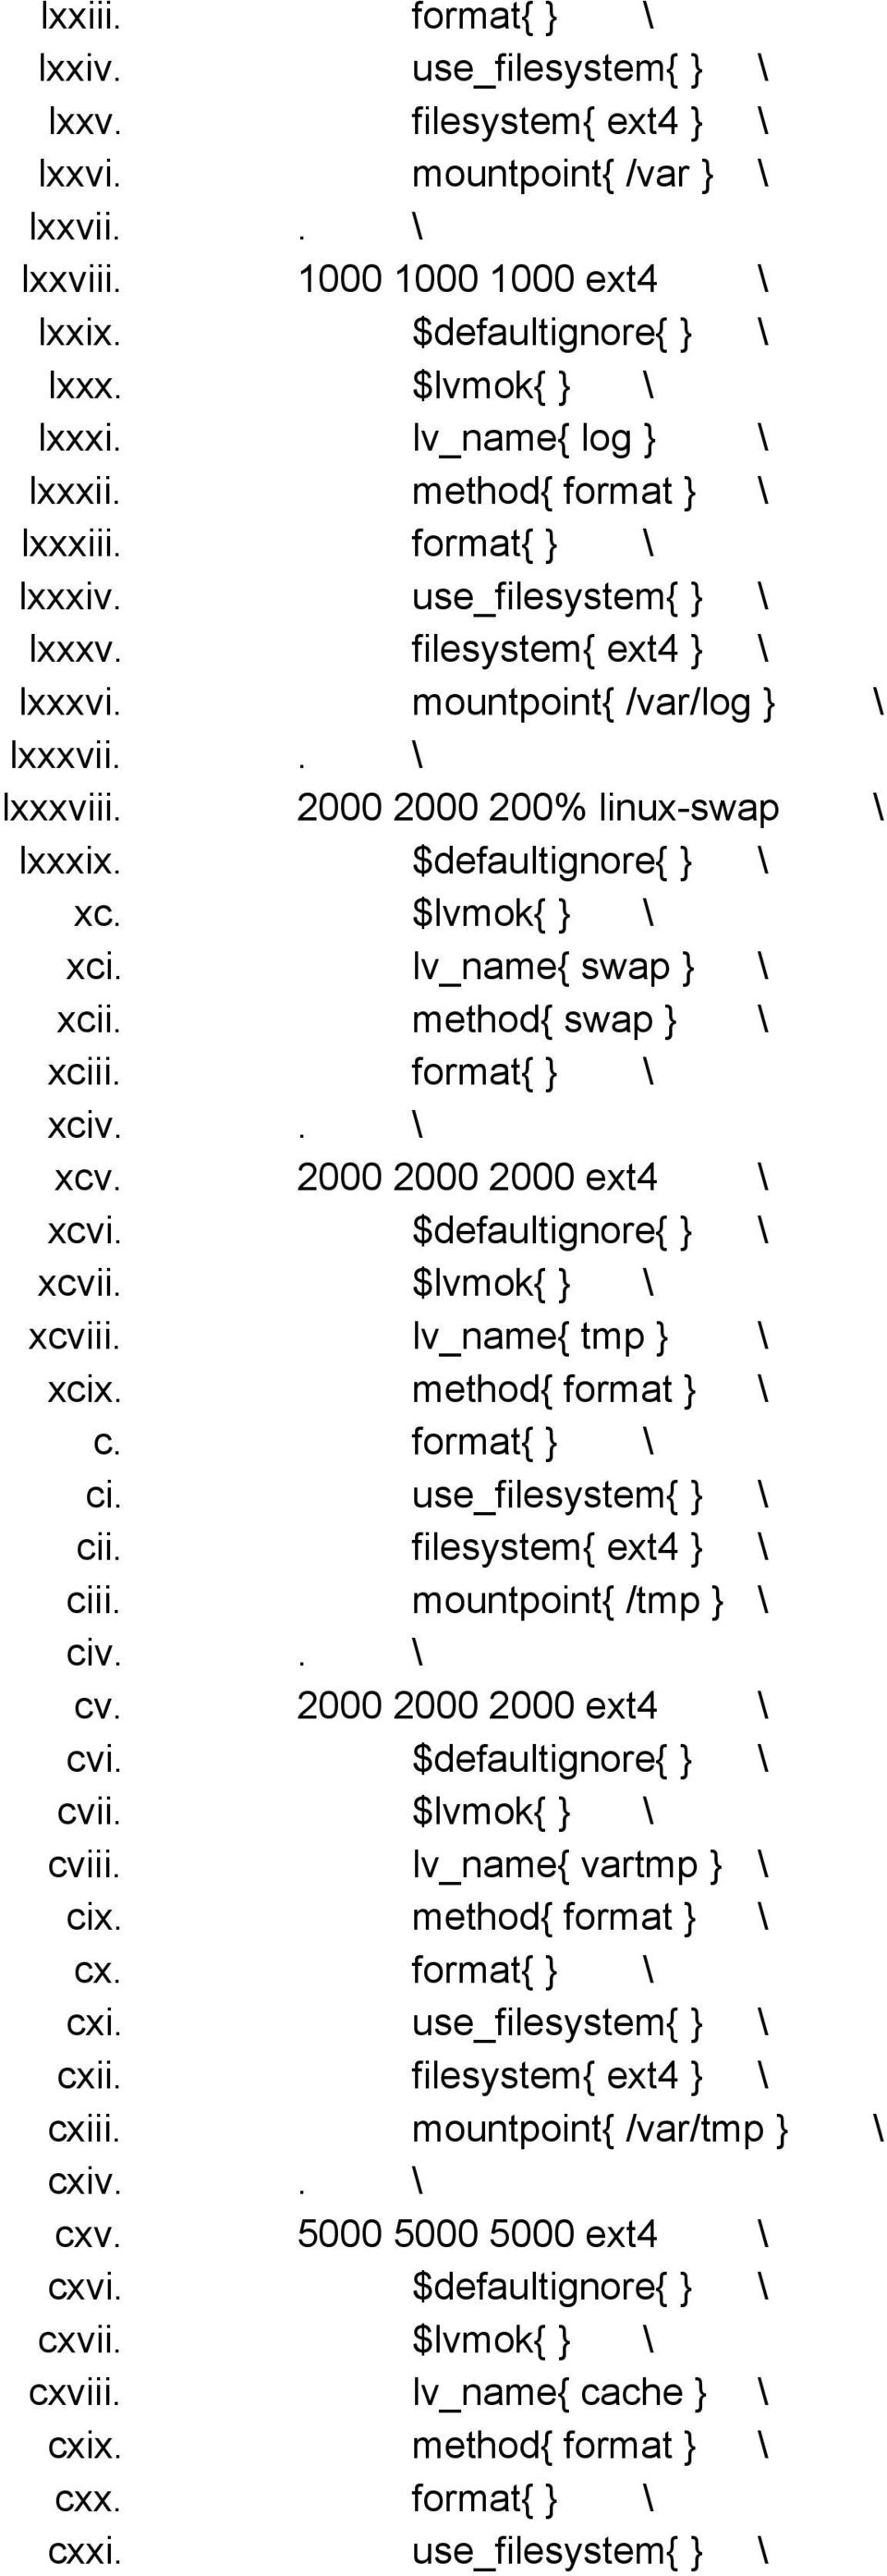 2000 2000 200% linux swap \ lxxxix. $defaultignore{ } \ xc. $lvmok{ } \ xci. lv_name{ swap } \ xcii. method{ swap } \ xciii. format{ } \ xciv.. \ xcv. 2000 2000 2000 ext4 \ xcvi.